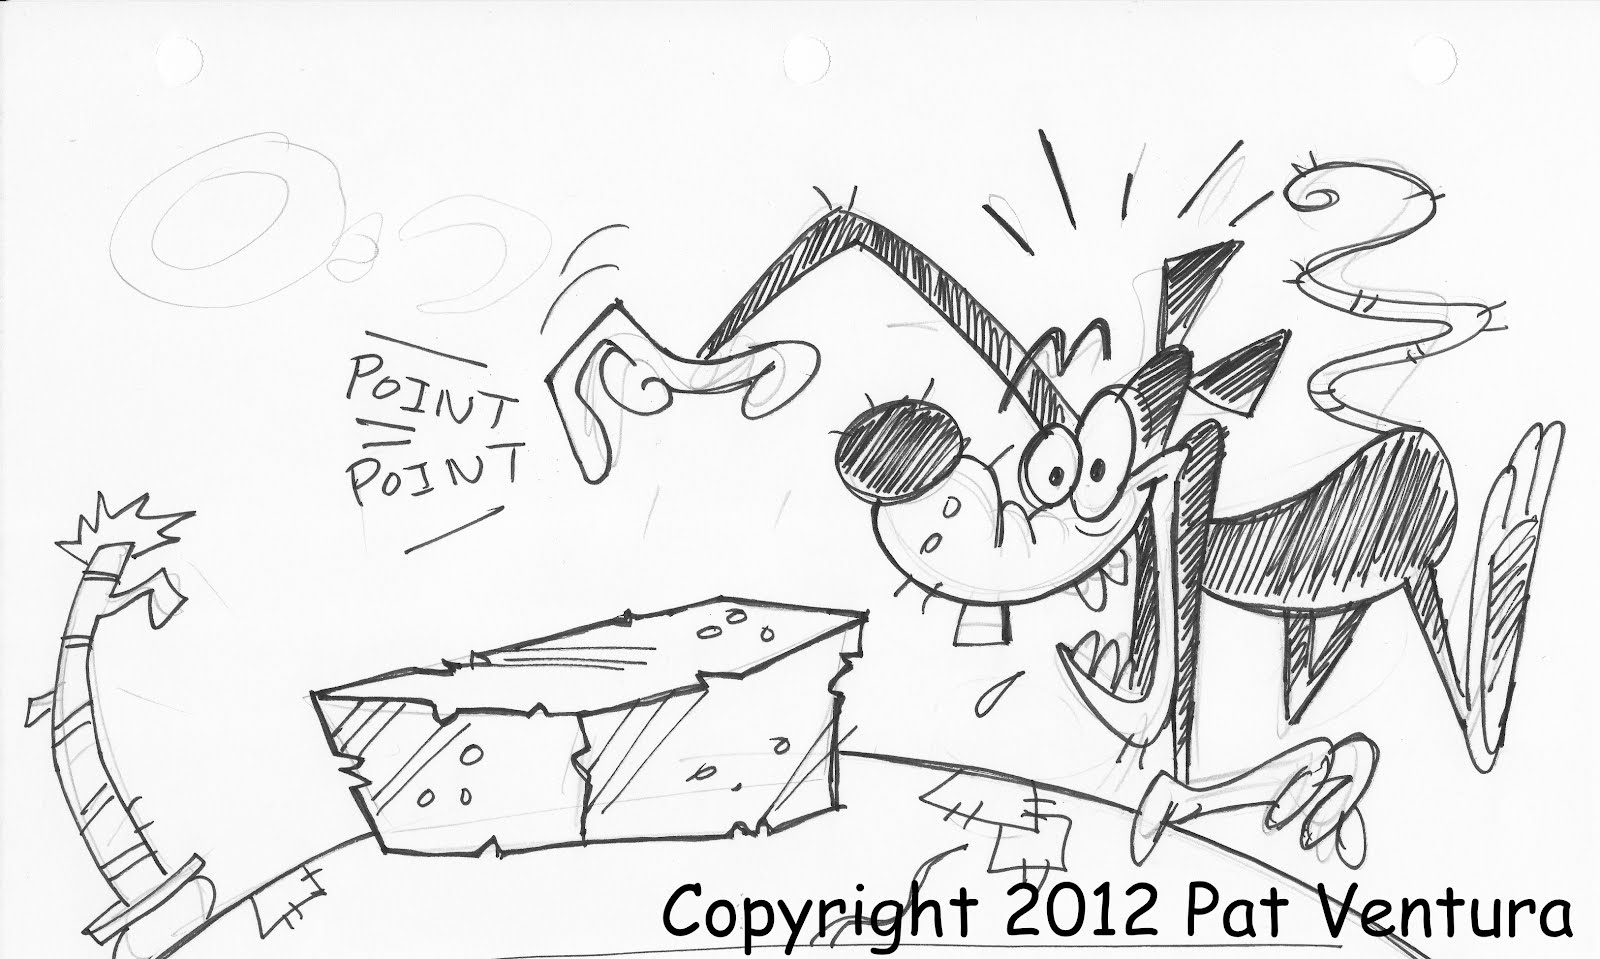 'Pat' Ventura's VenturaToons: Cartoon Sketches